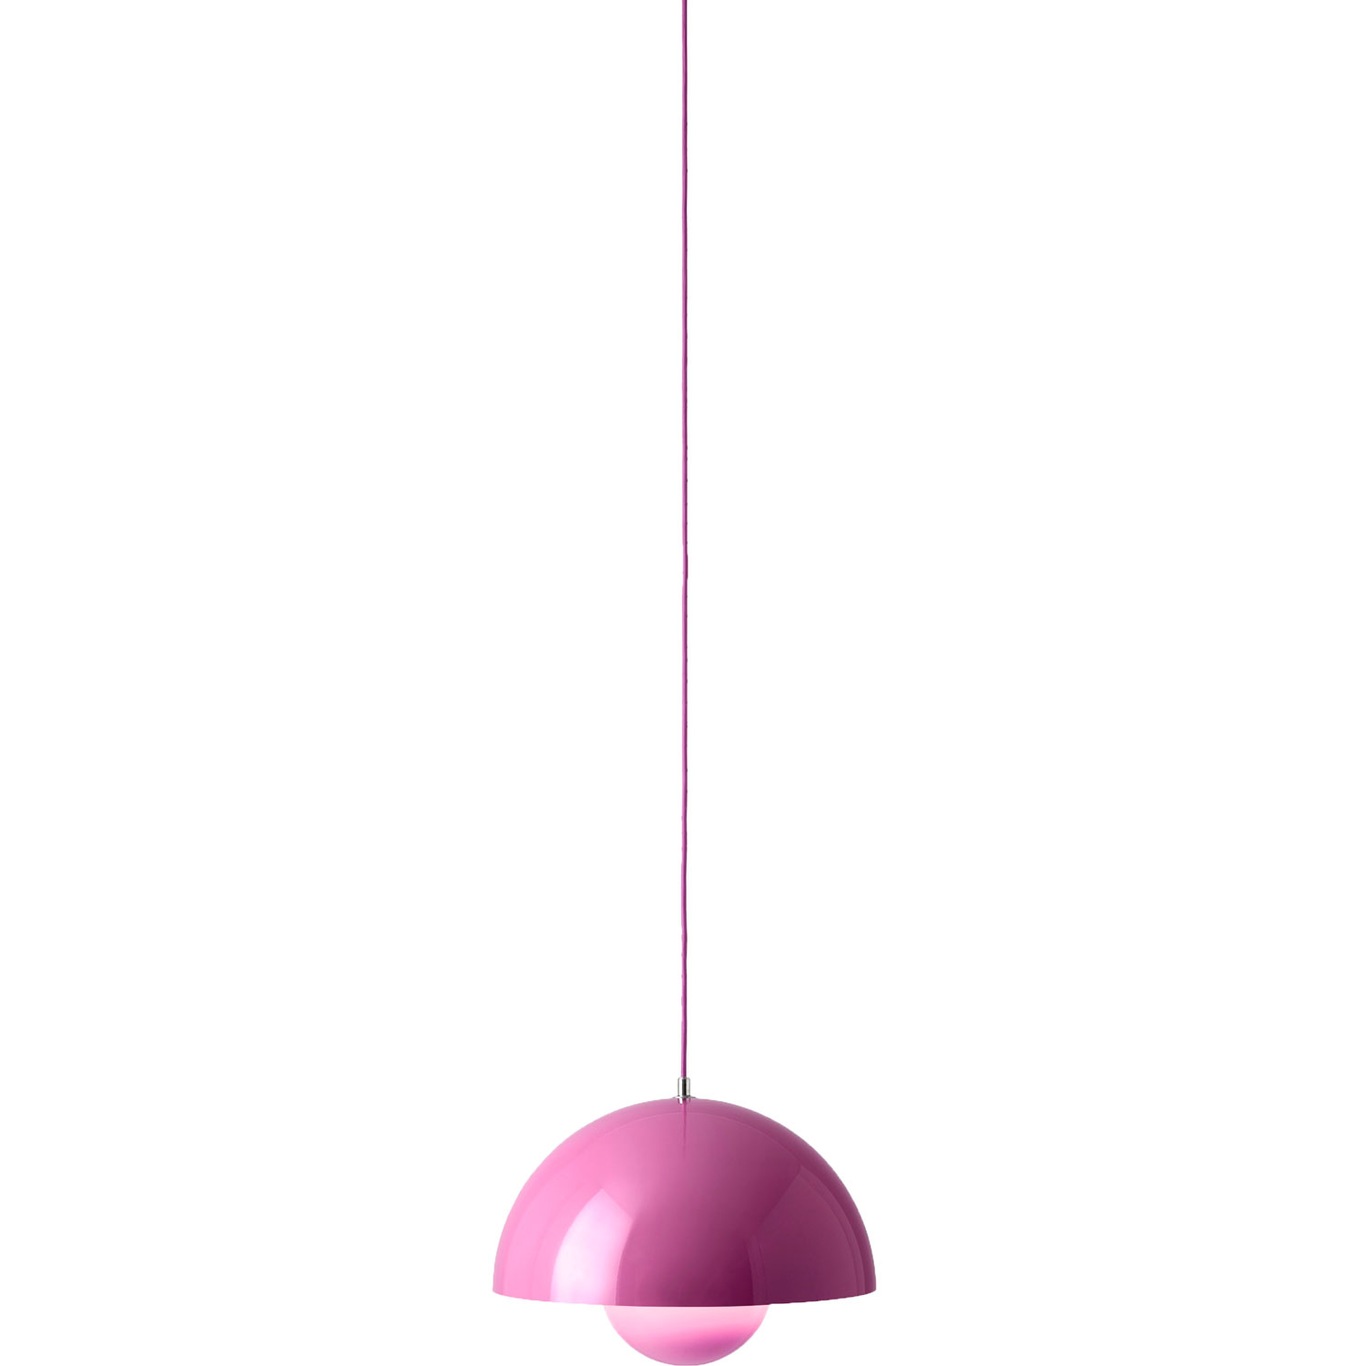 Flowerpot VP7 Pendant, Tangy Pink